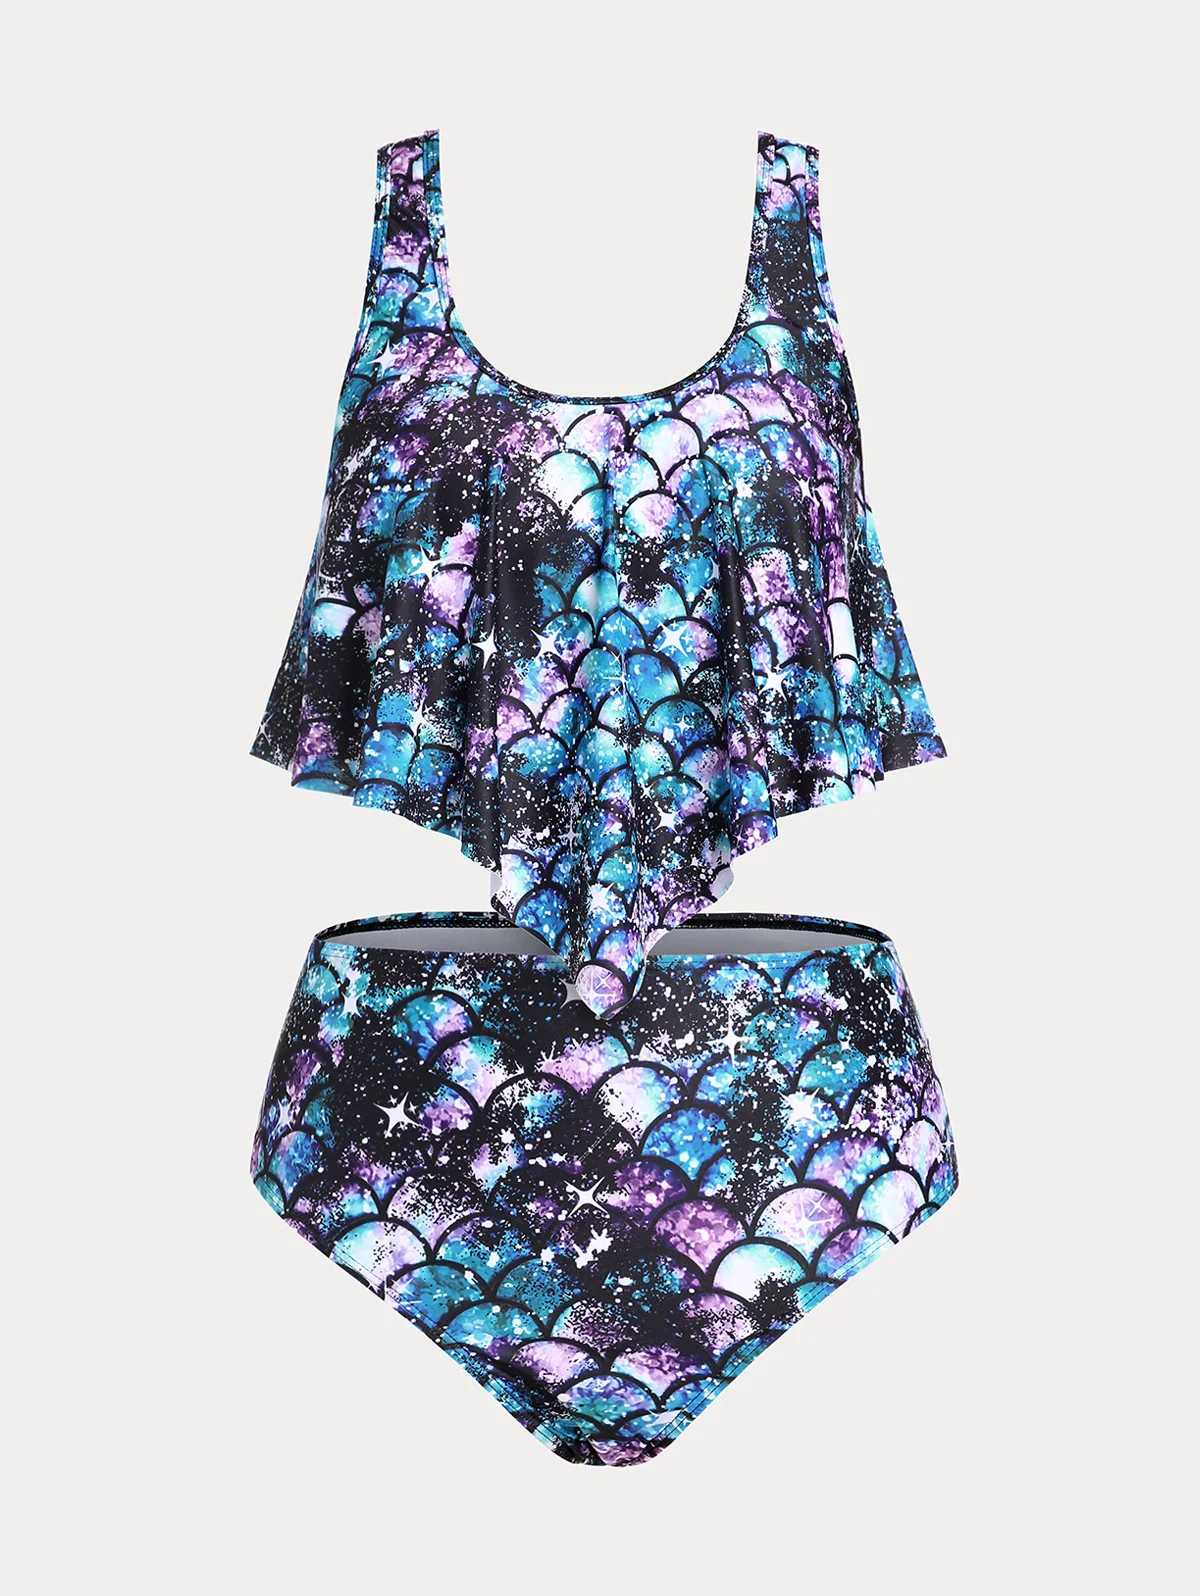 Shinny Ruffled Overlay Mermaid Print Tankini Swimwear Fishtail Print Bathing Suits Galaxy Print 2022 Woman Swimsuit